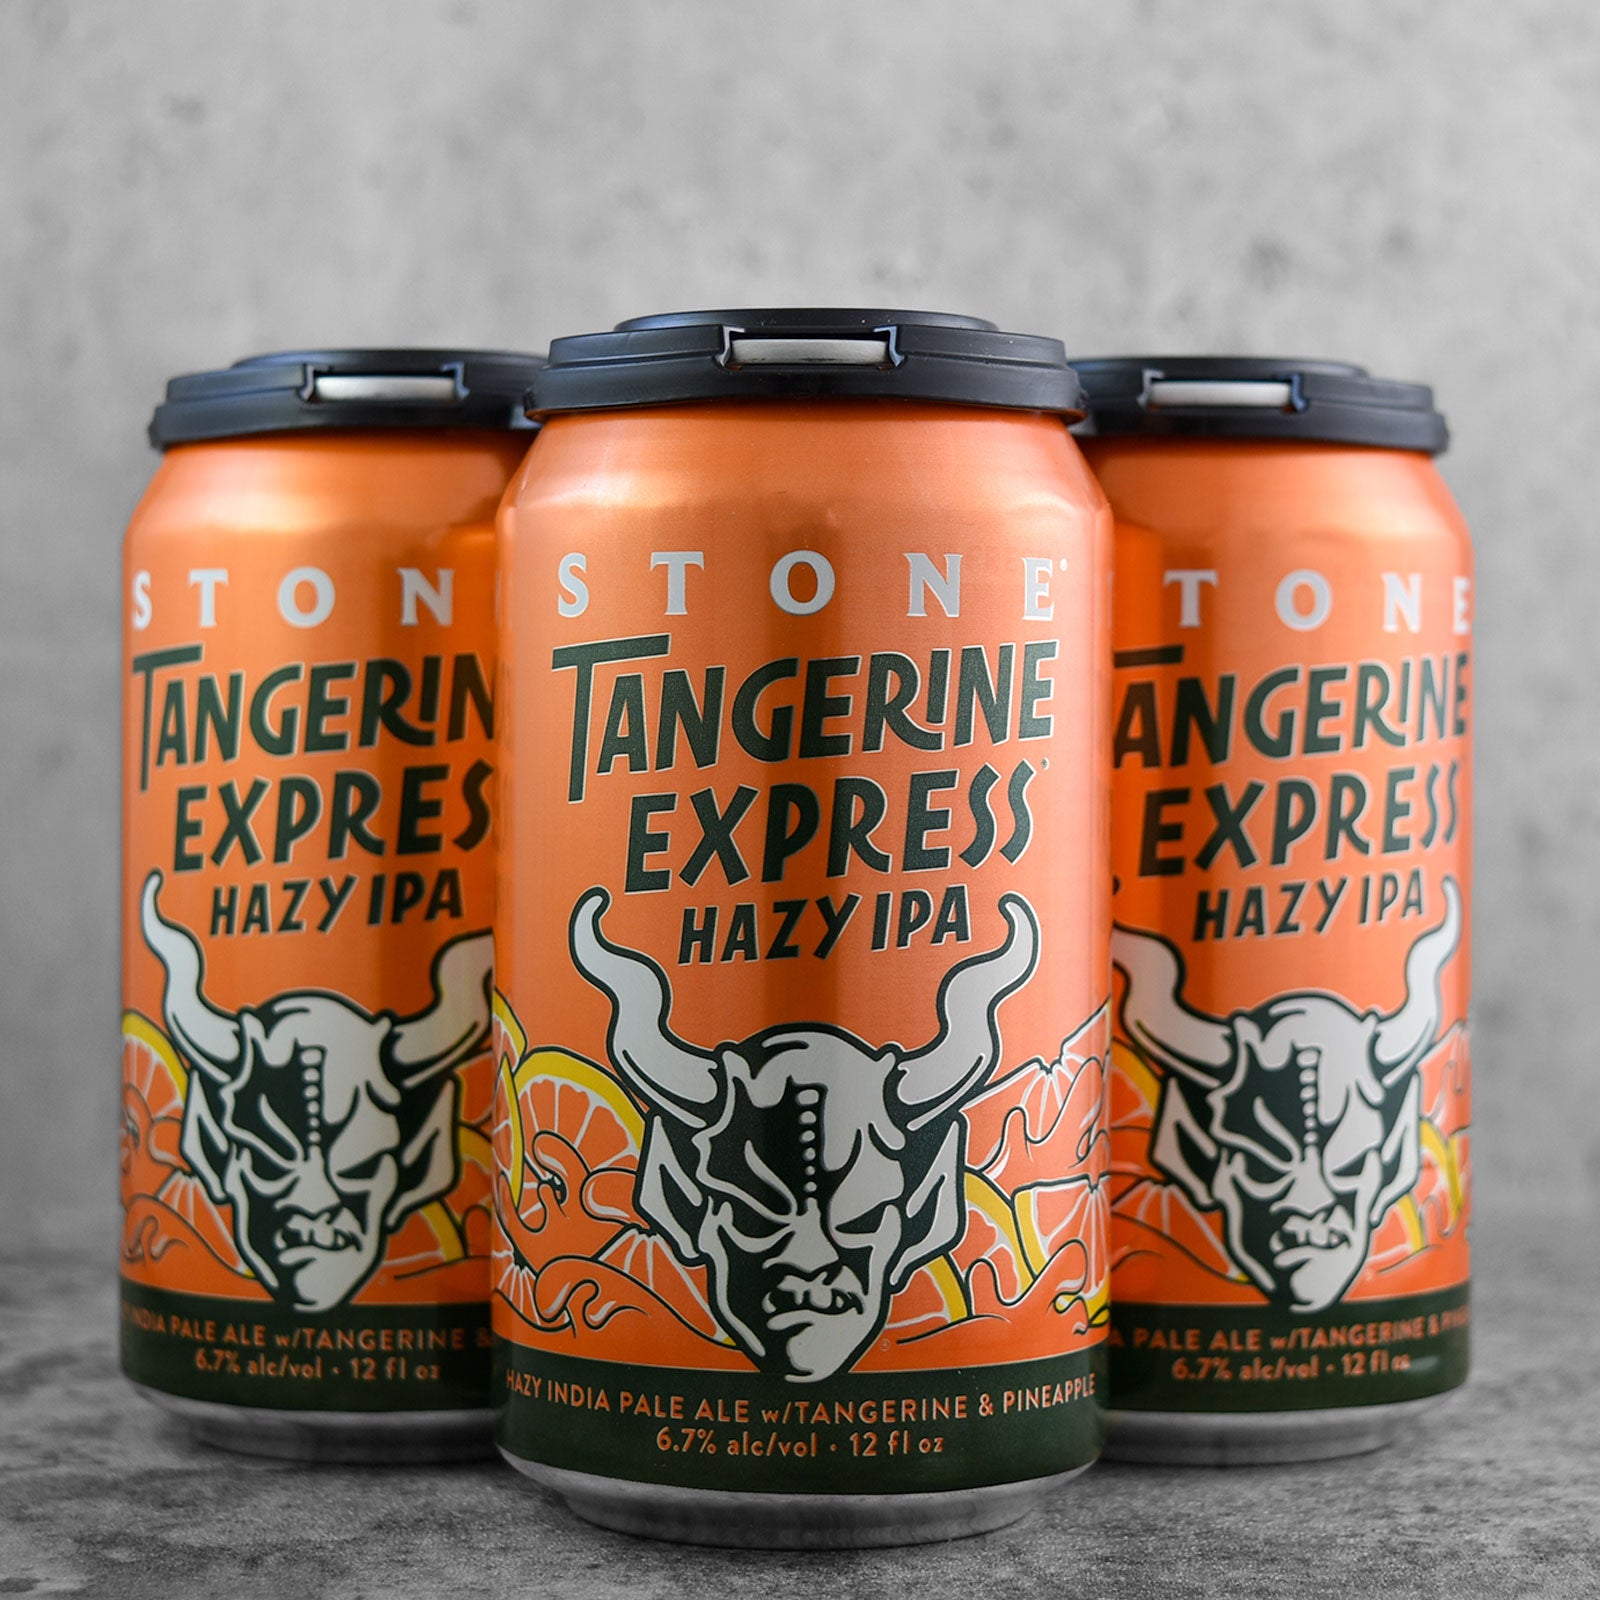 Stone Tangerine Express Hazy IPA – CBK